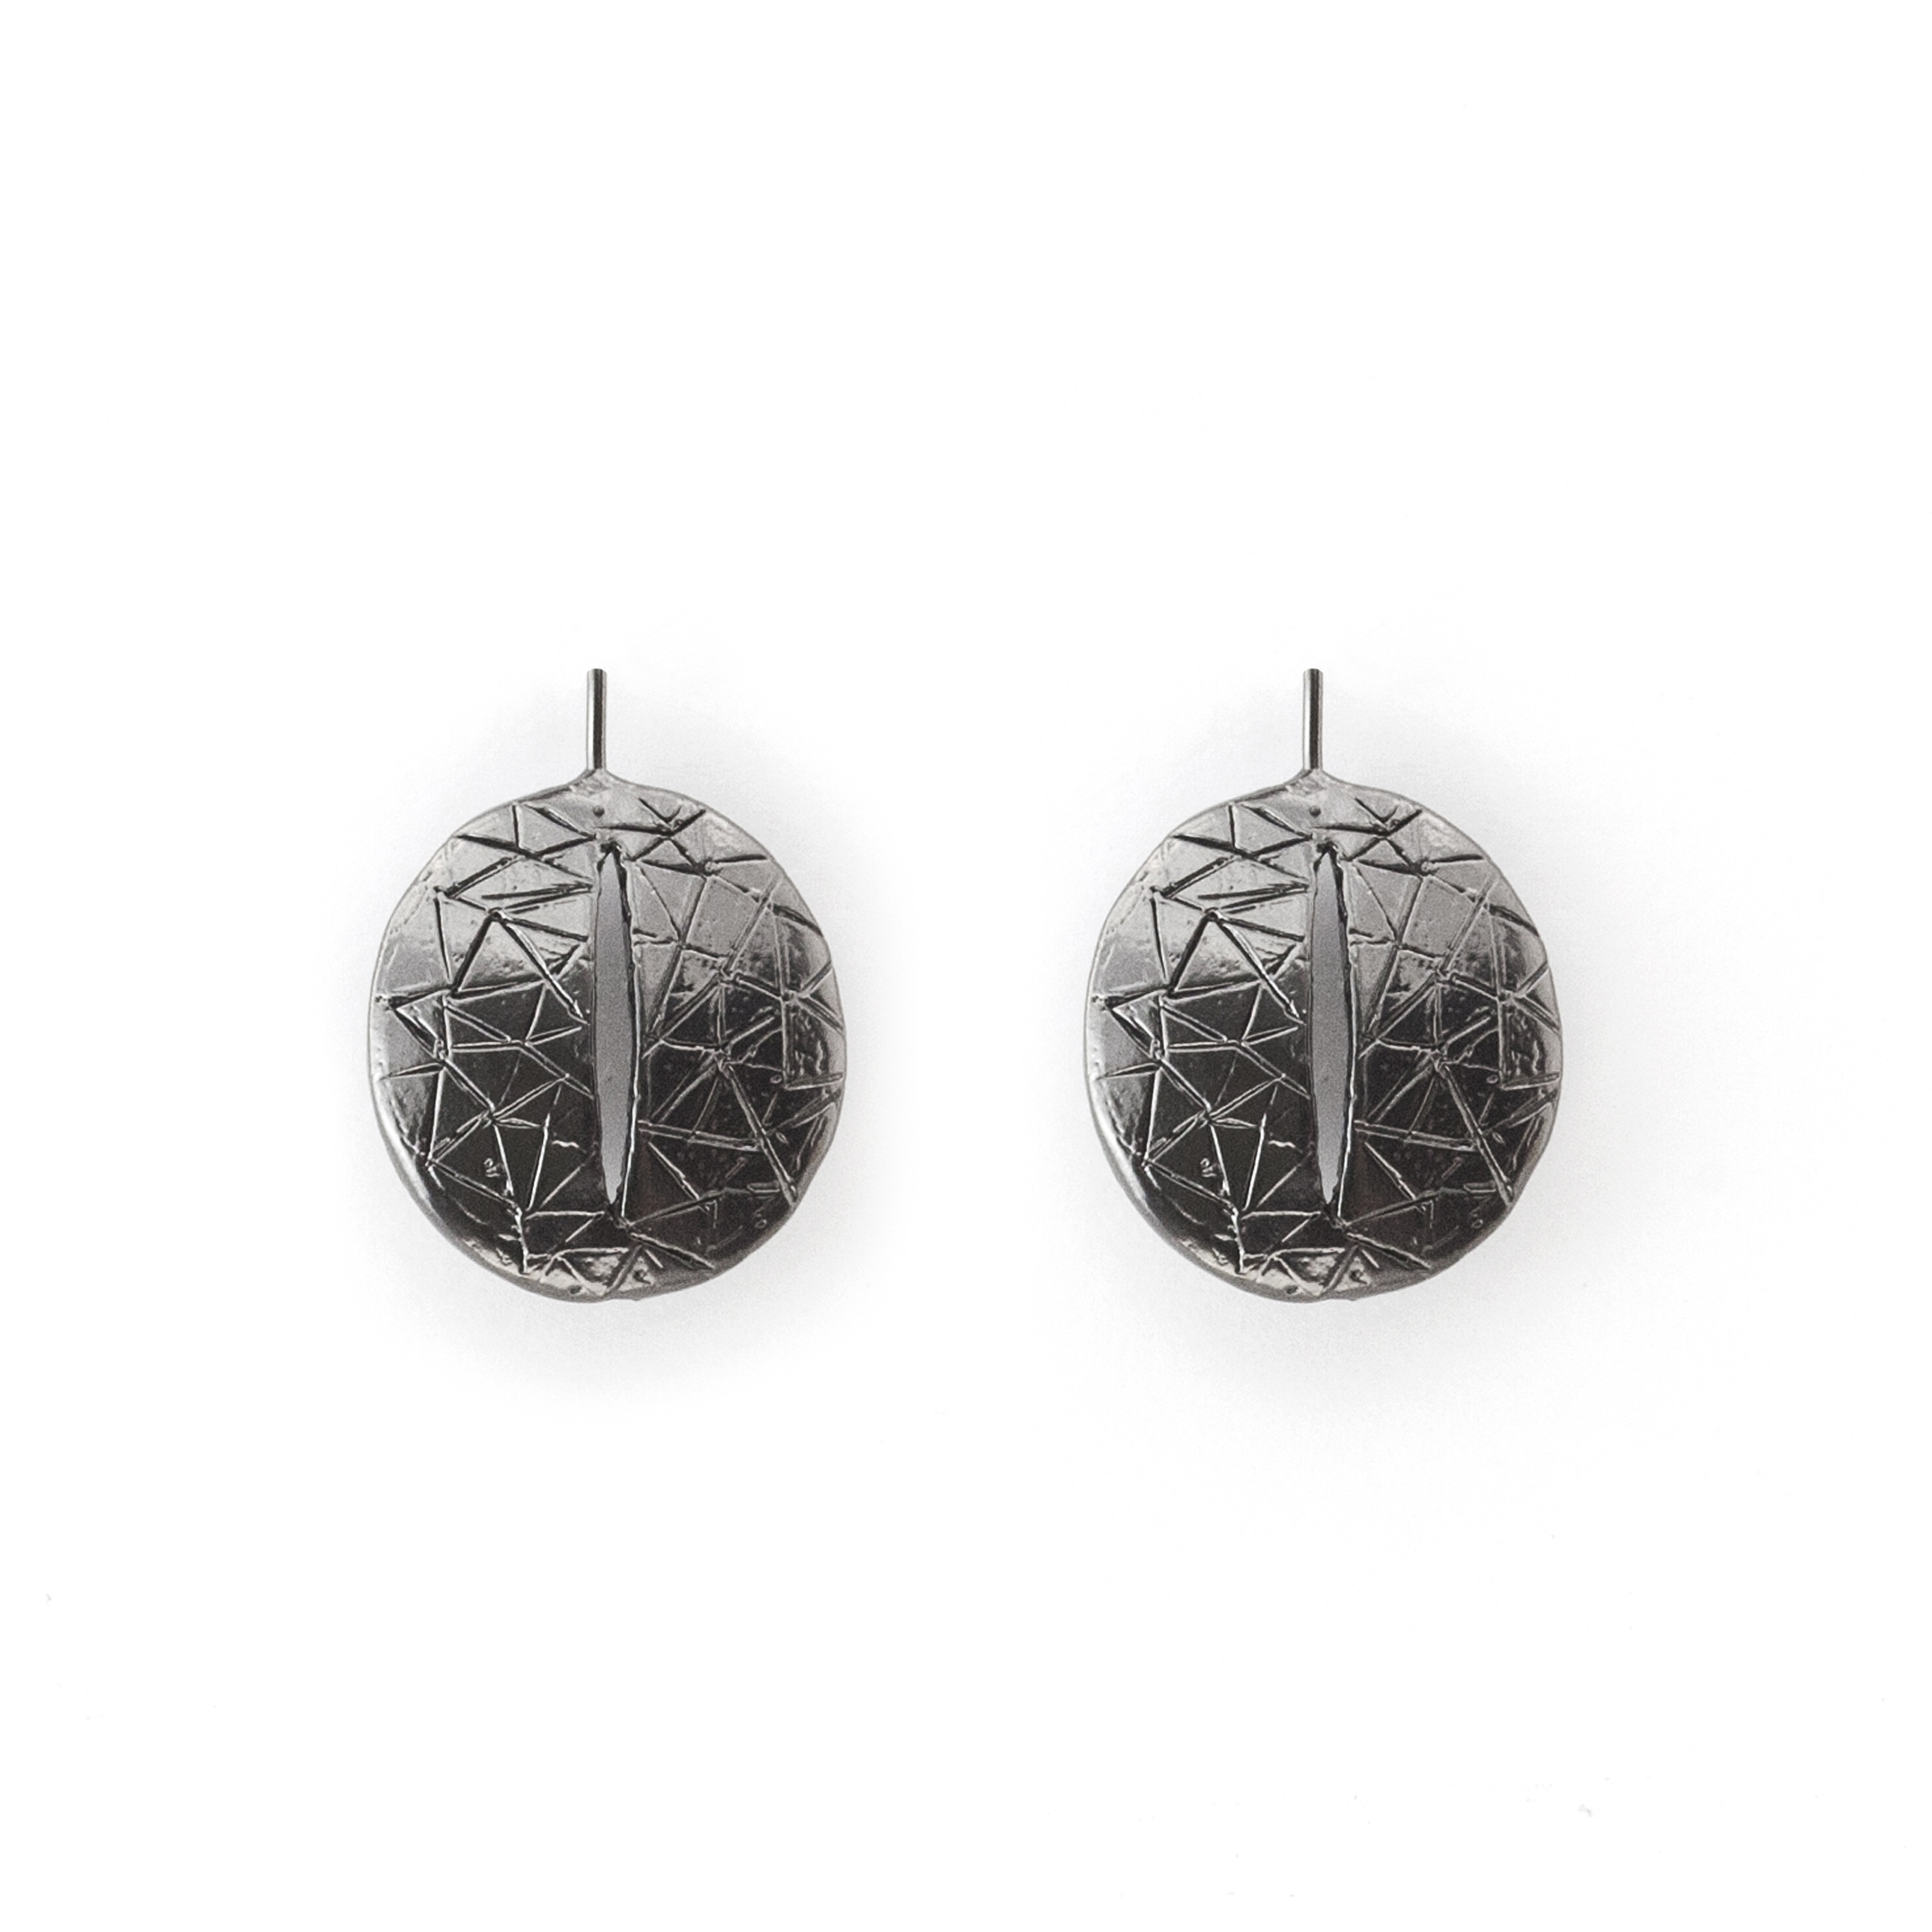 EYE_eye earrings silver black rhodium